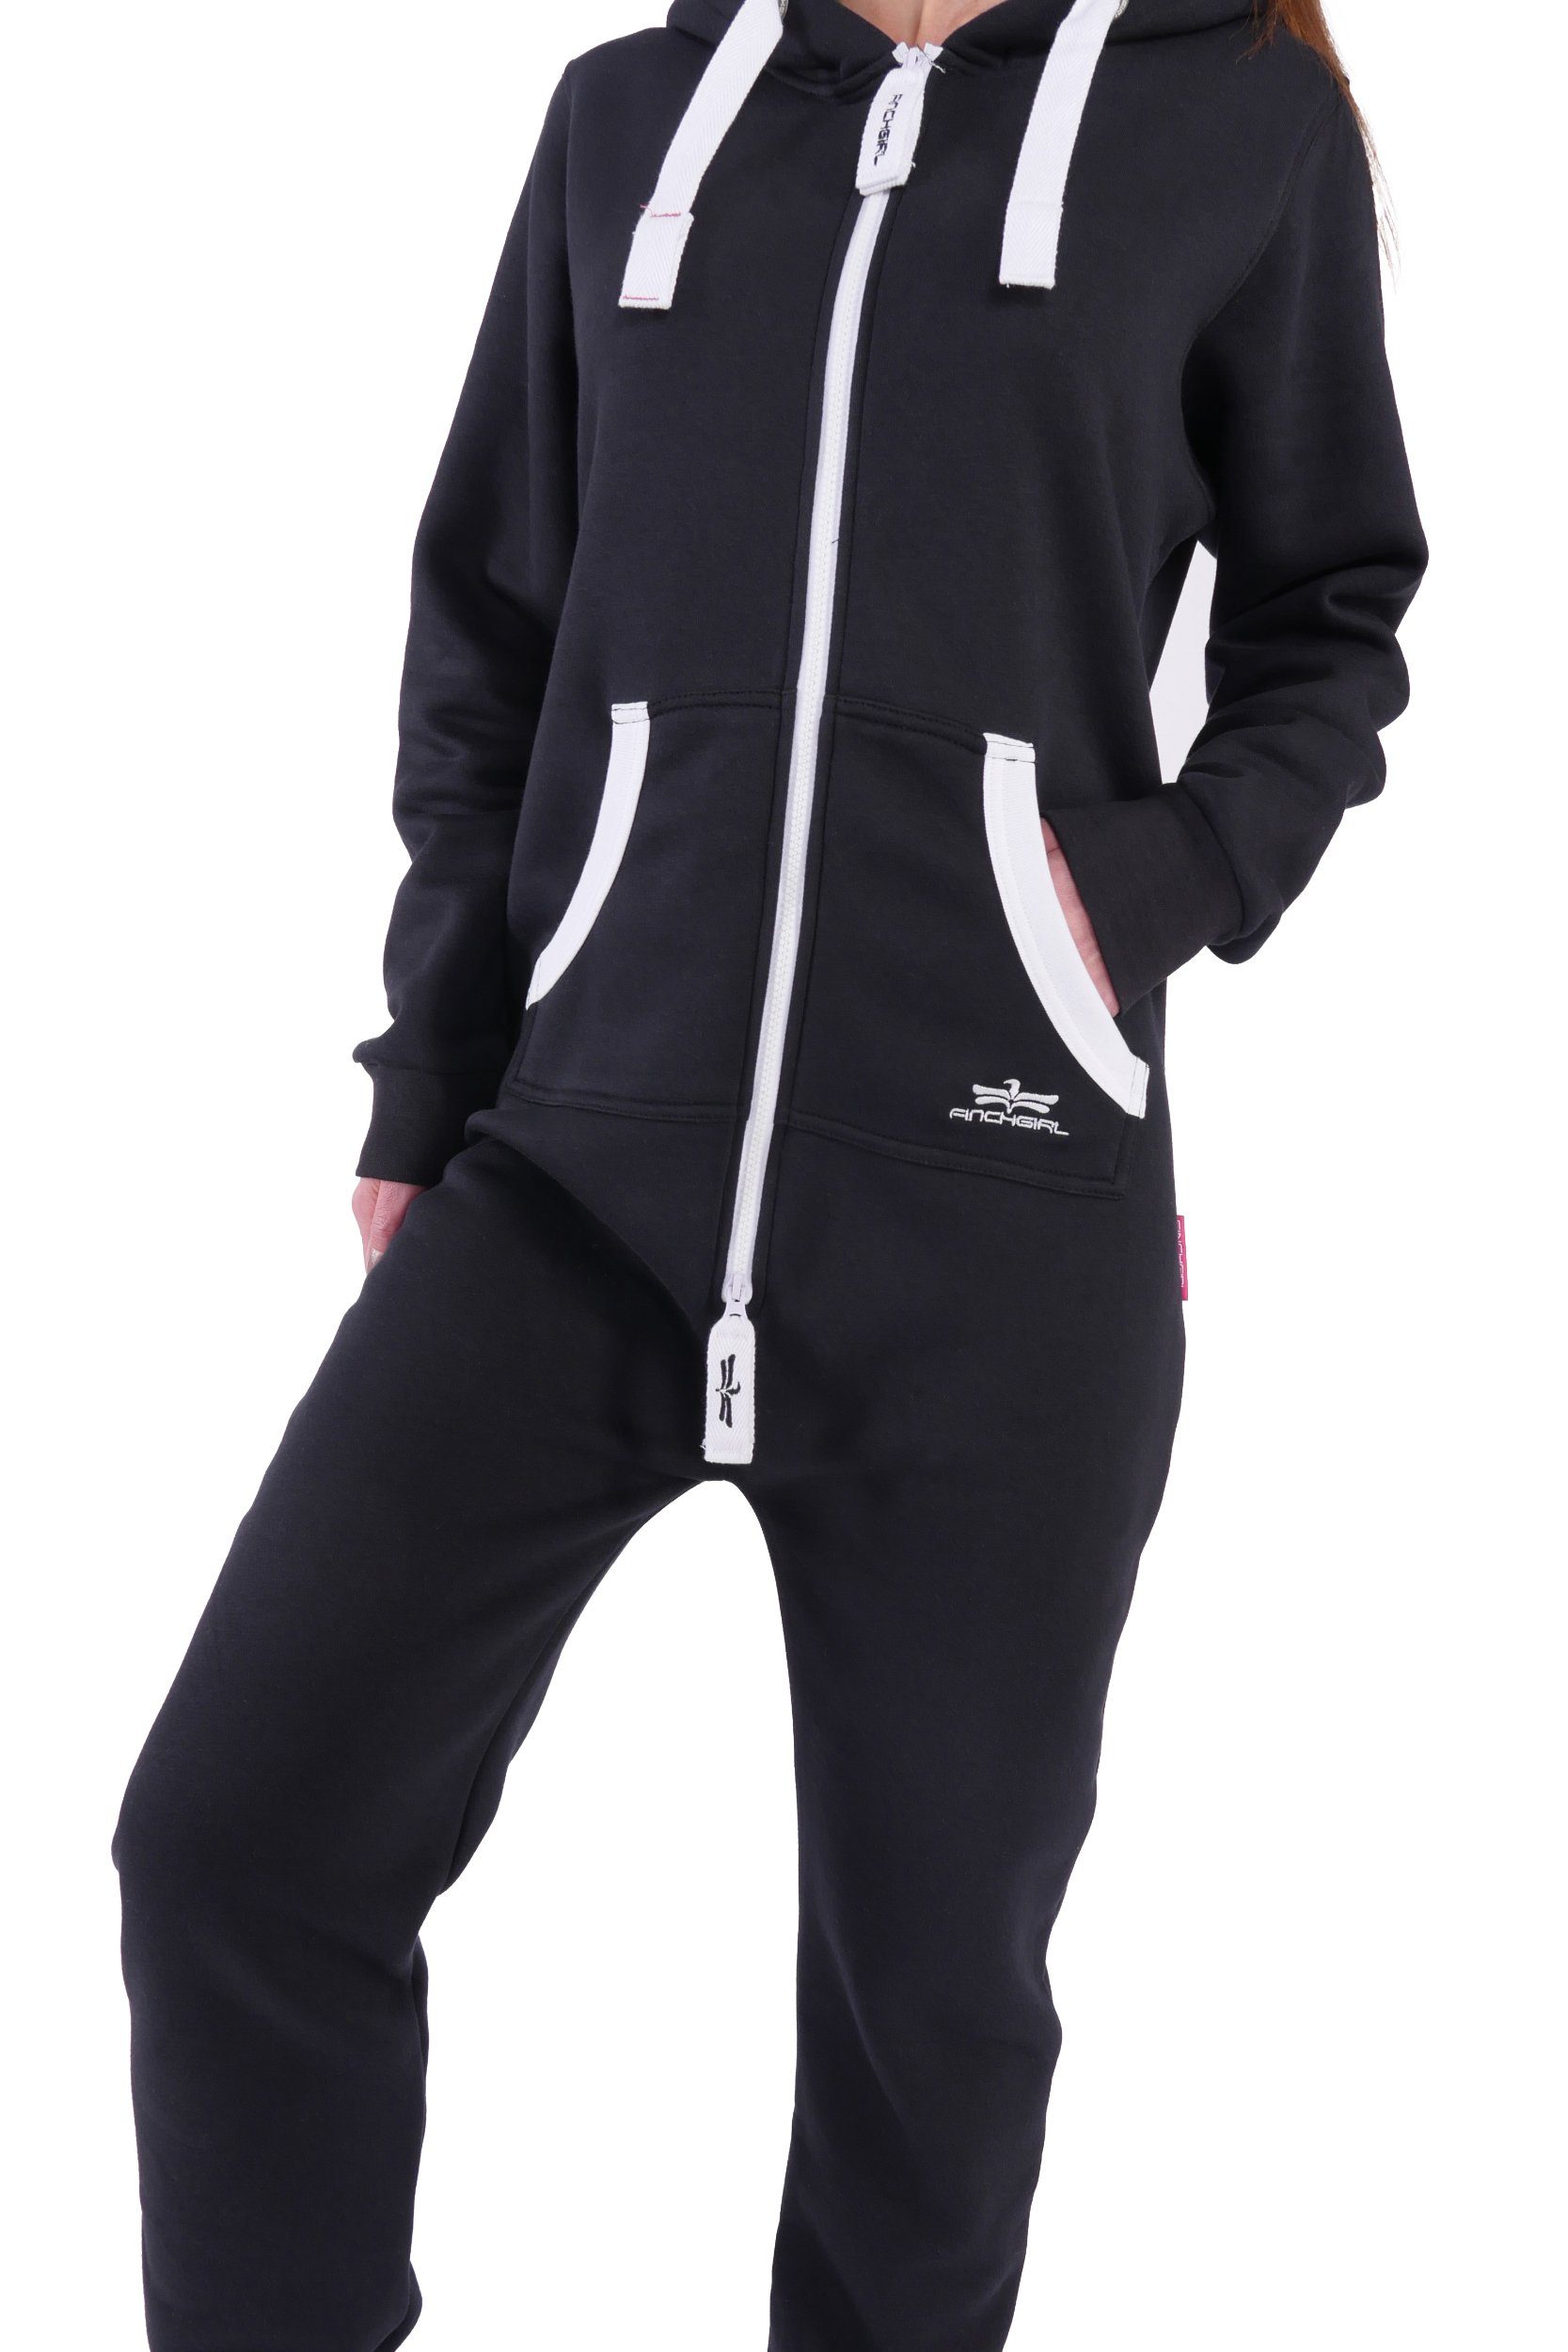 Finchgirl Jumpsuit FG18R Damen Anzug Jogging Trainingsanzug Overall Schwarz Jogger Jumpsuit